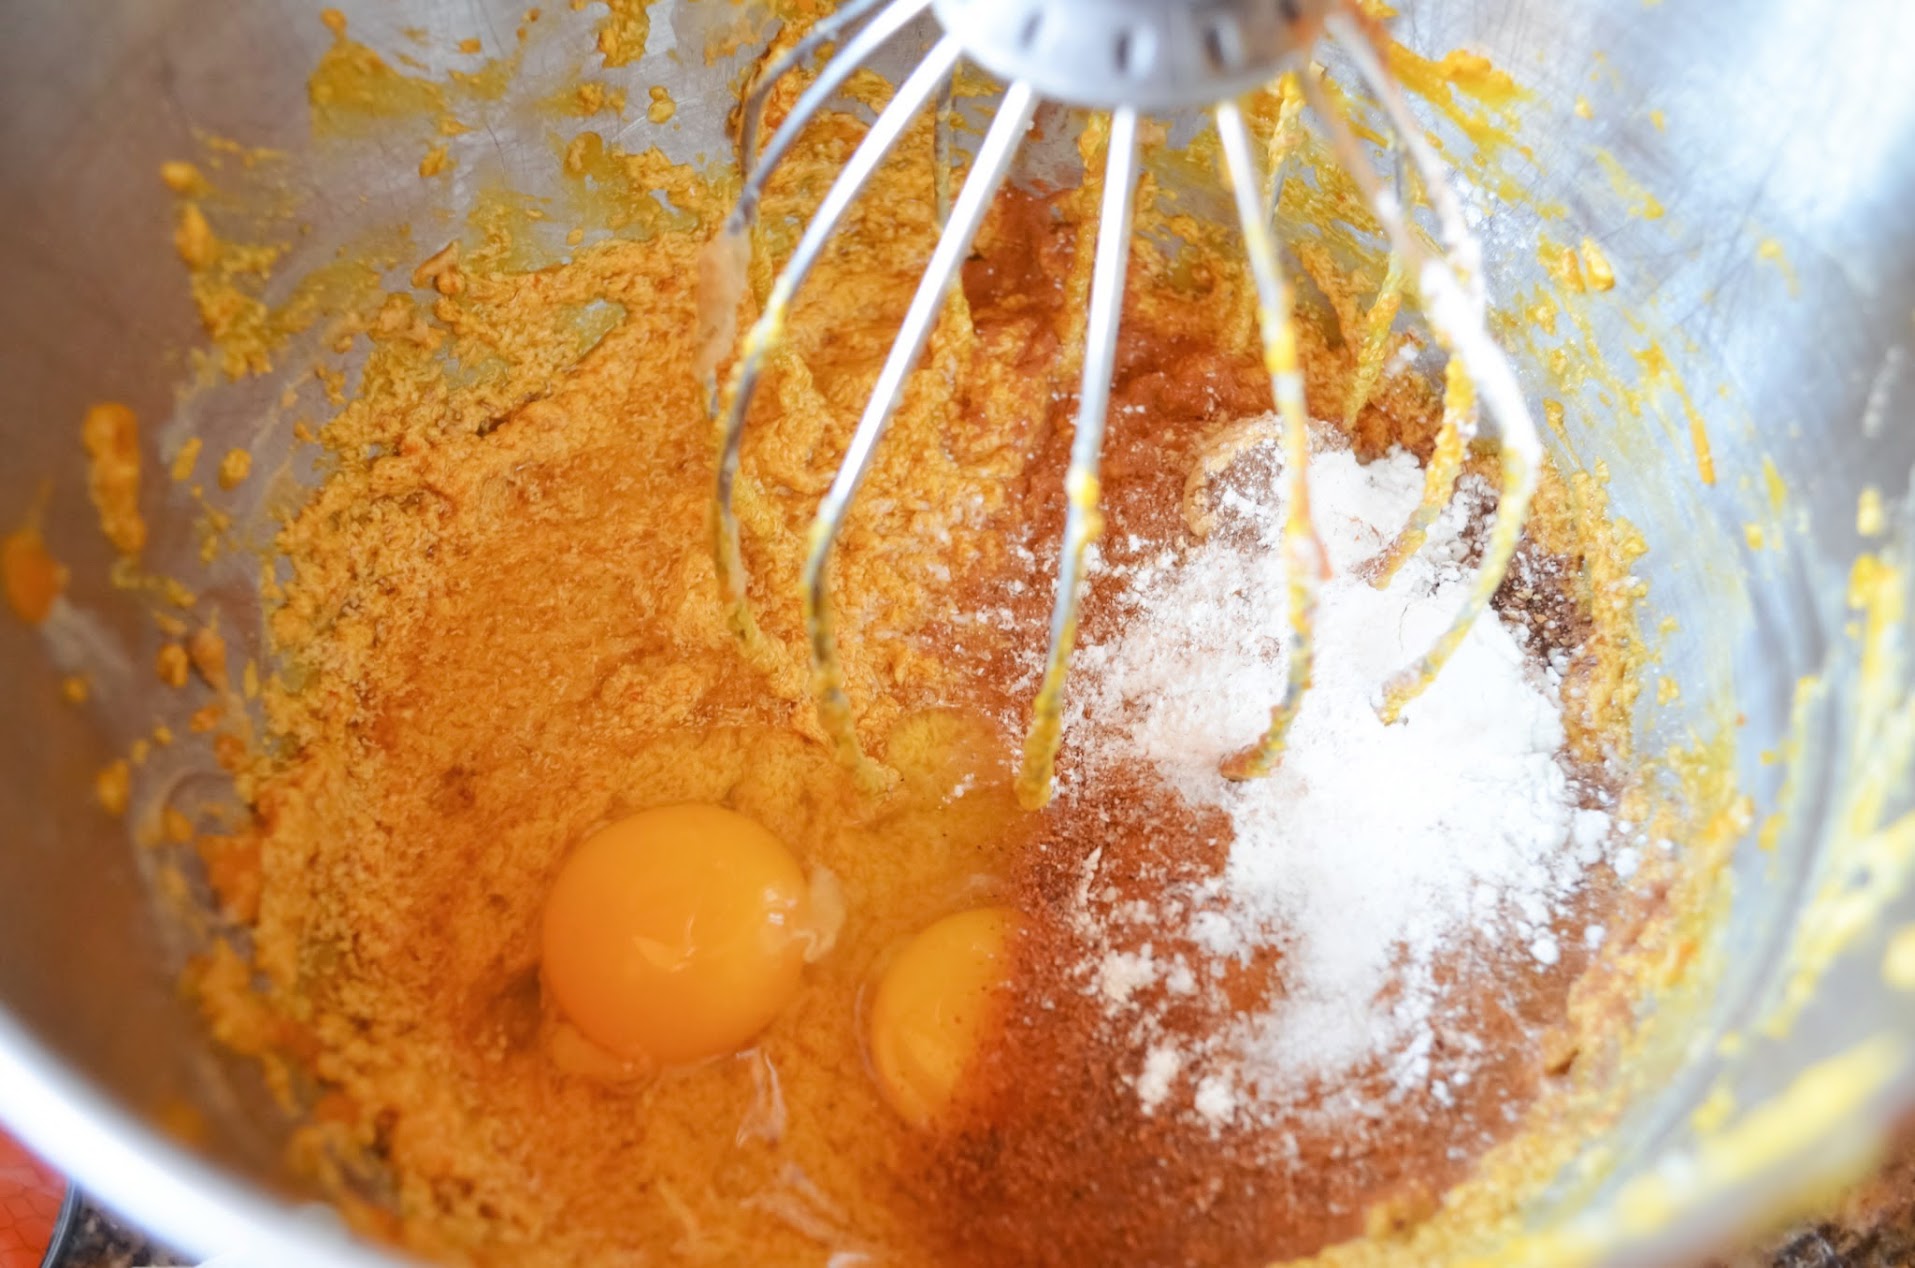 Pumpkin-Muffins-Eggs-Baking-Soda-Baking-Powder-Cinnamon-Ginger-Allspice-Nutmeg-Vanilla.jpg